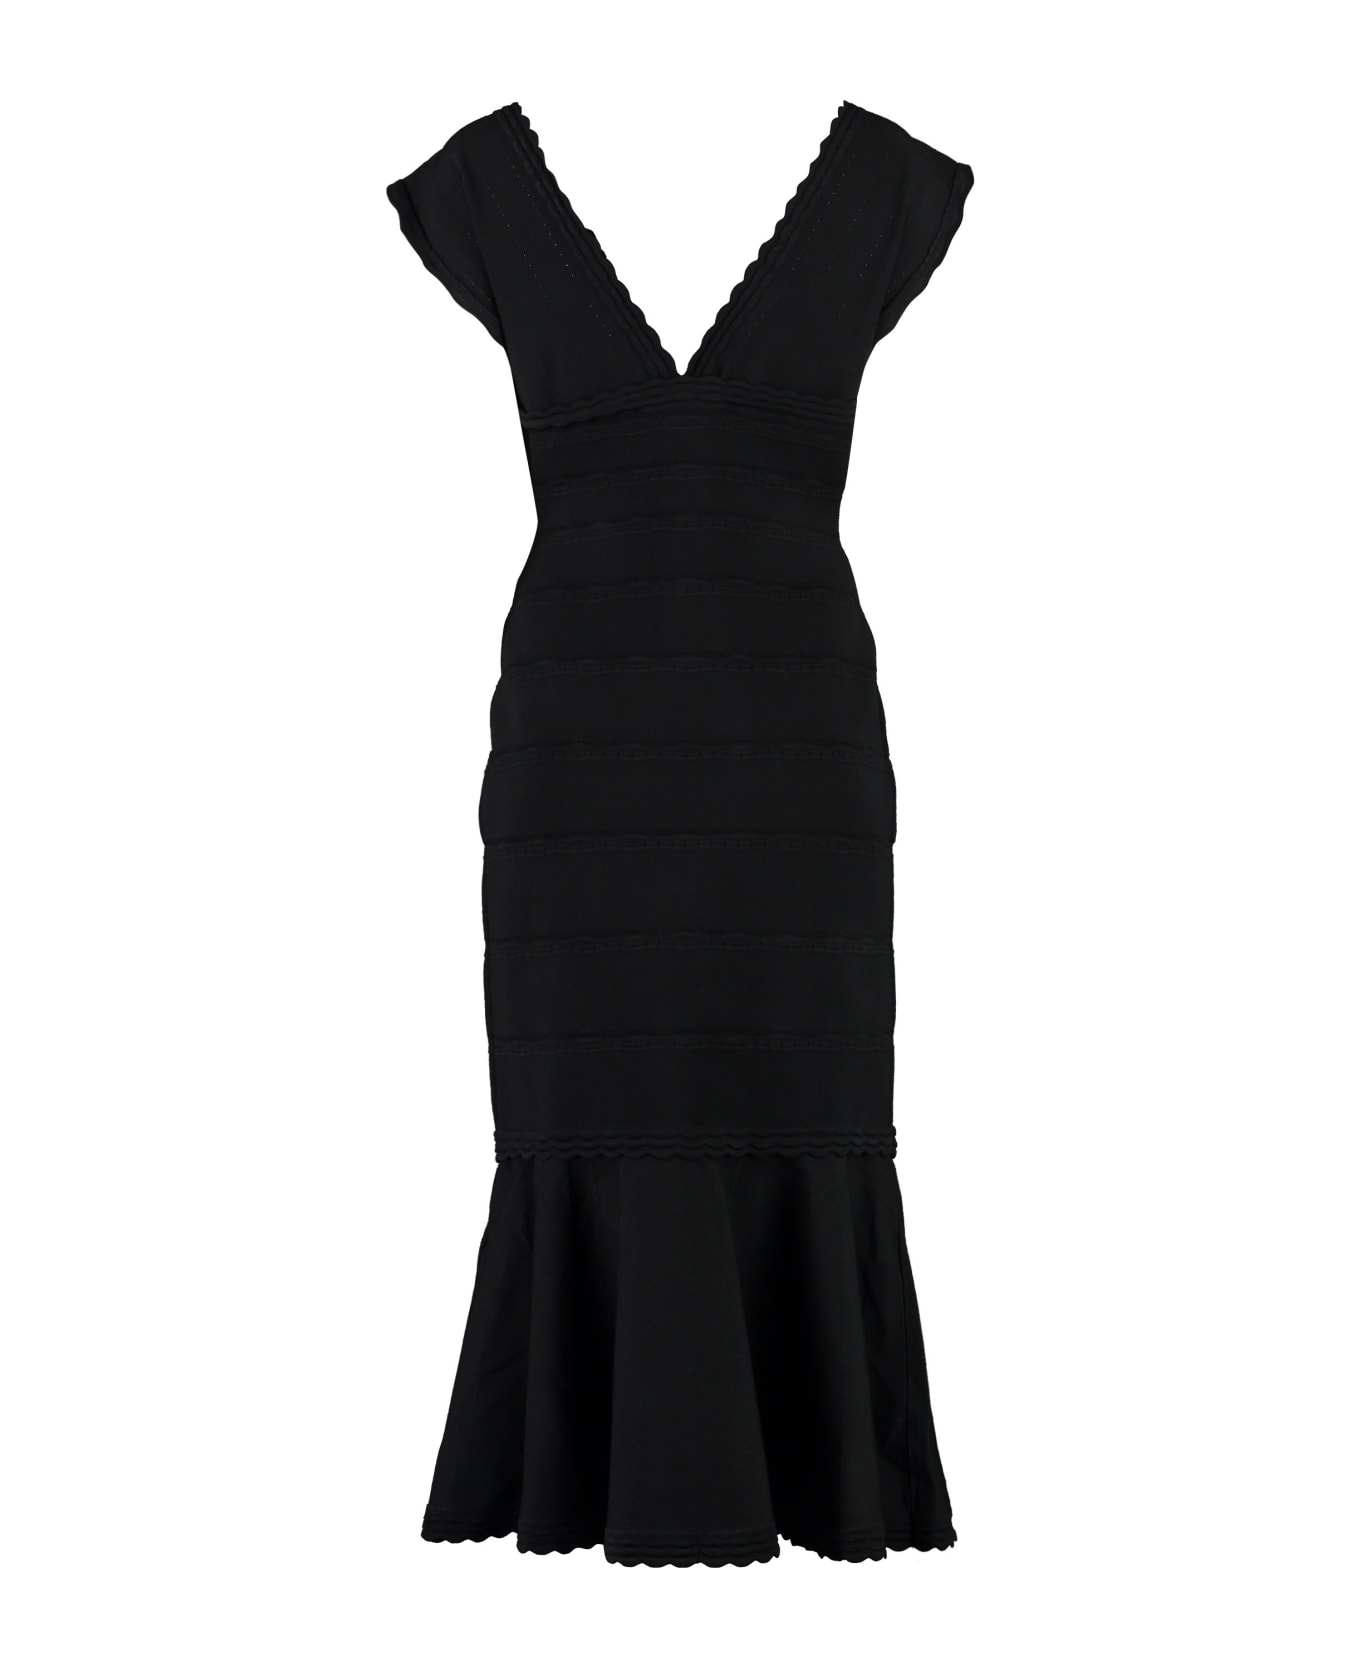 Victoria Beckham Flared Dress - black